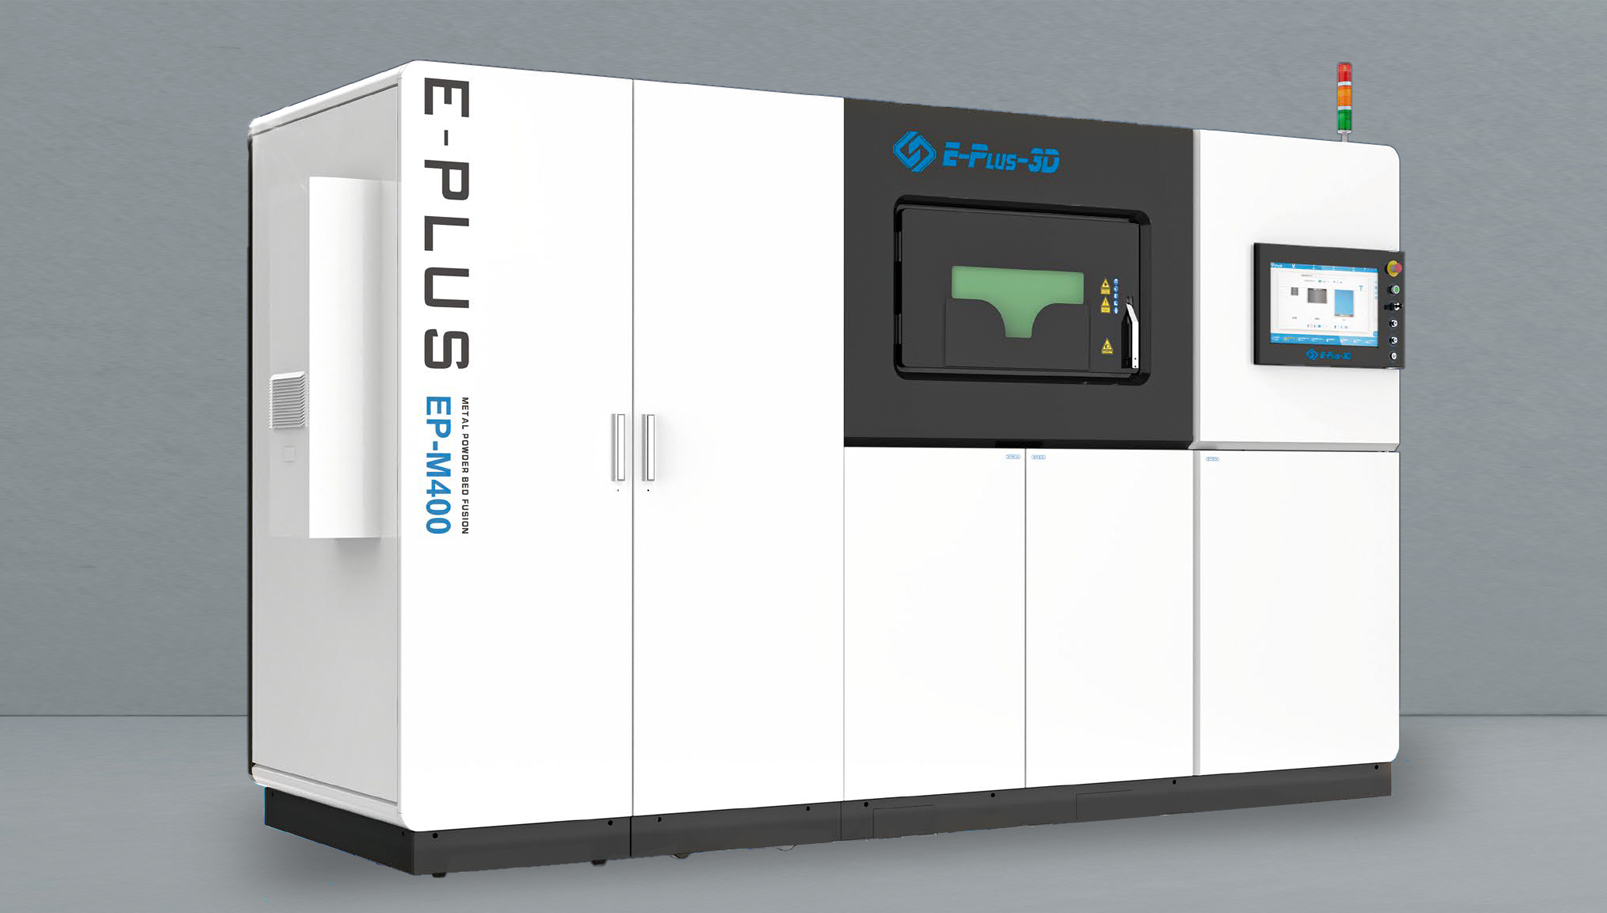 Eplus3D Launches Another Quad-Laser Metal 3D Printer